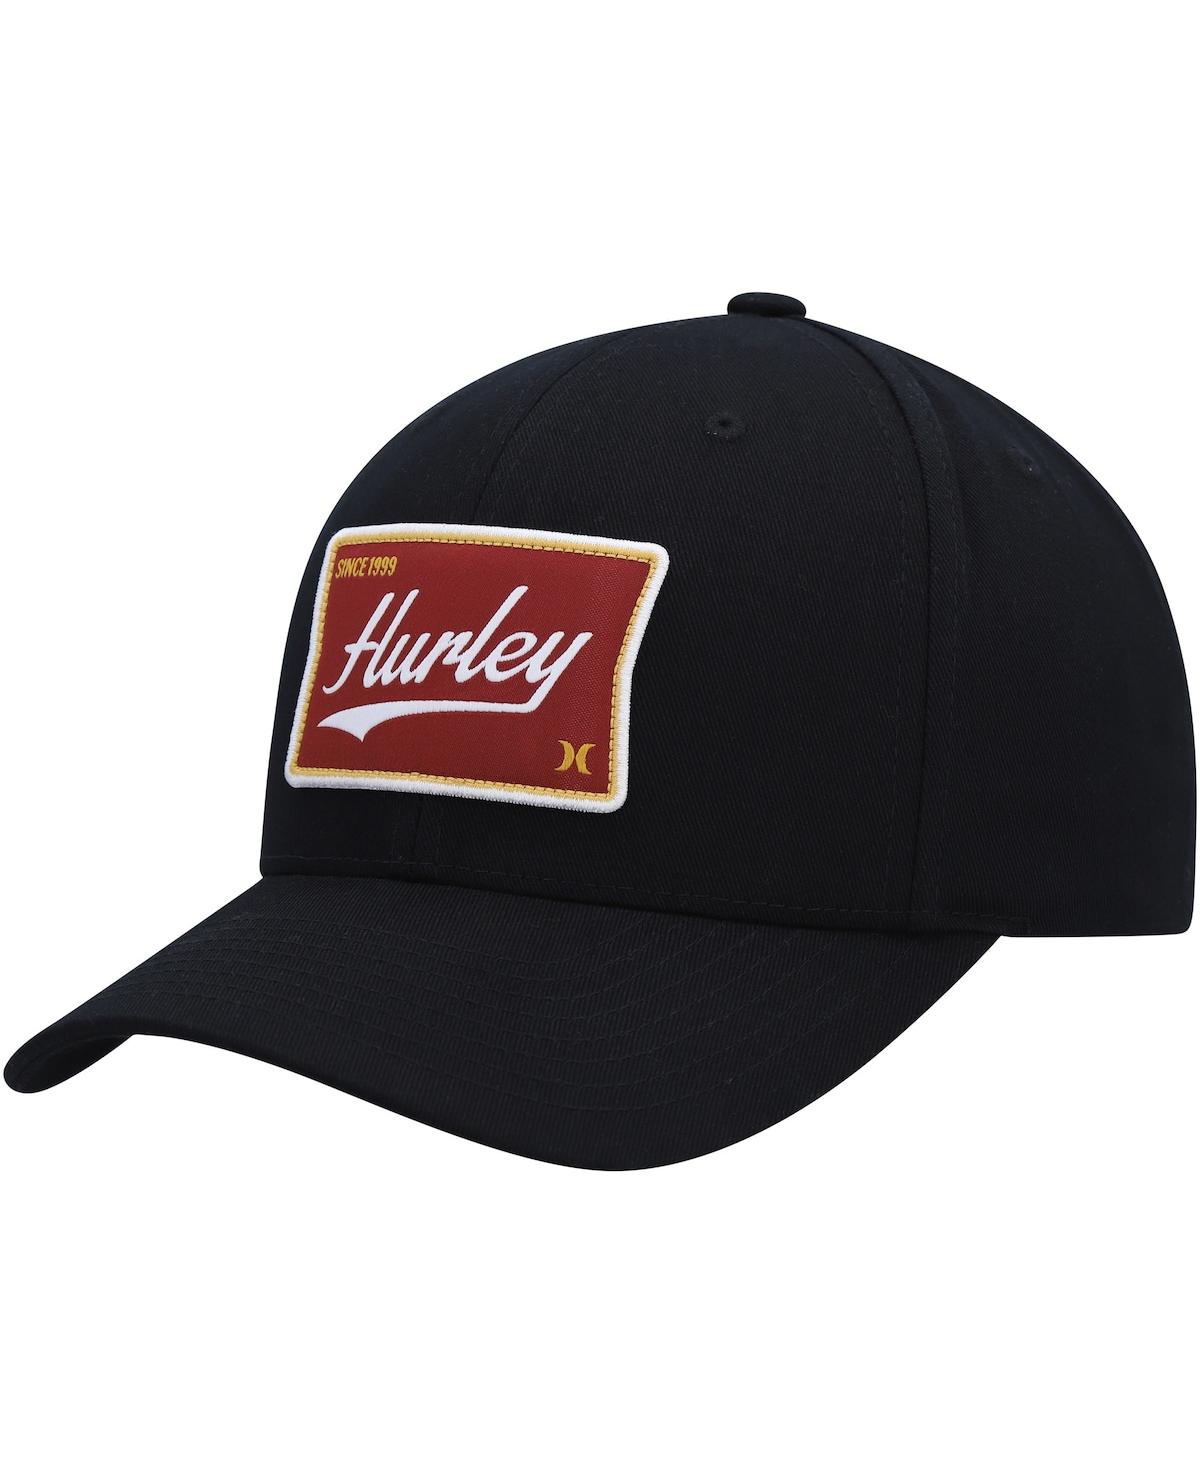 Shop Hurley Men's  Black Casper Snapback Hat